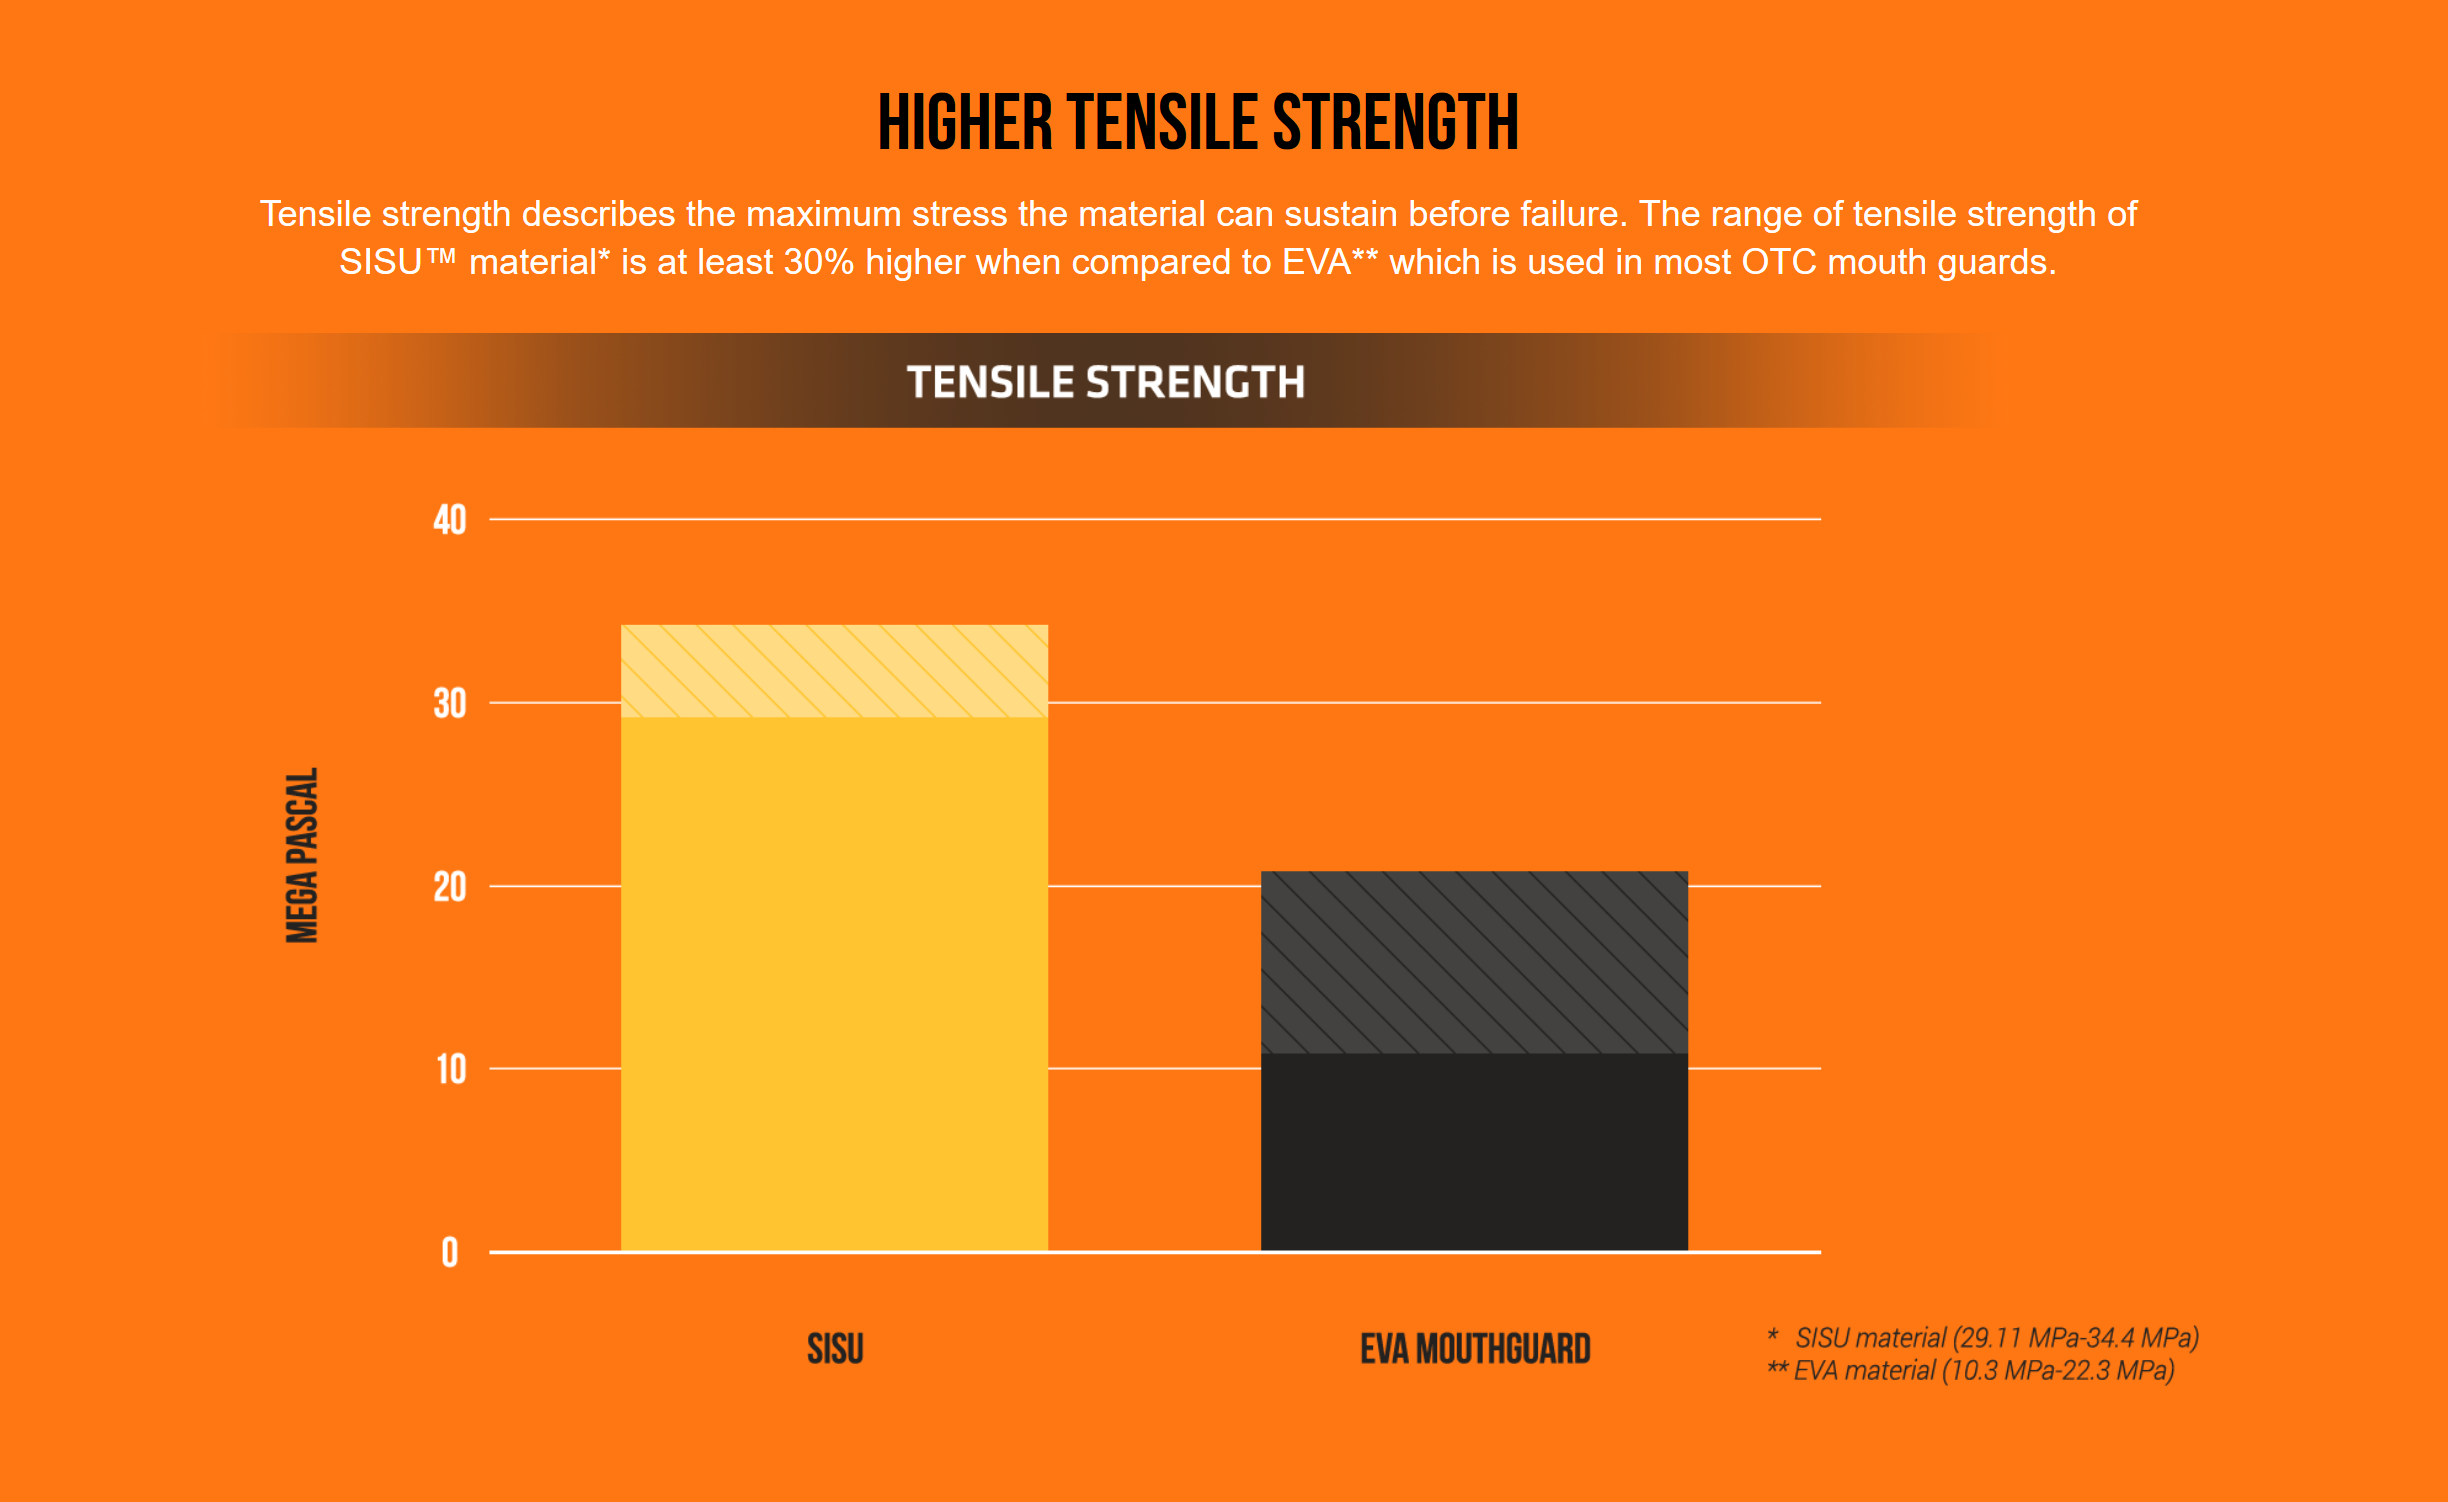 Higher Tensile Strength